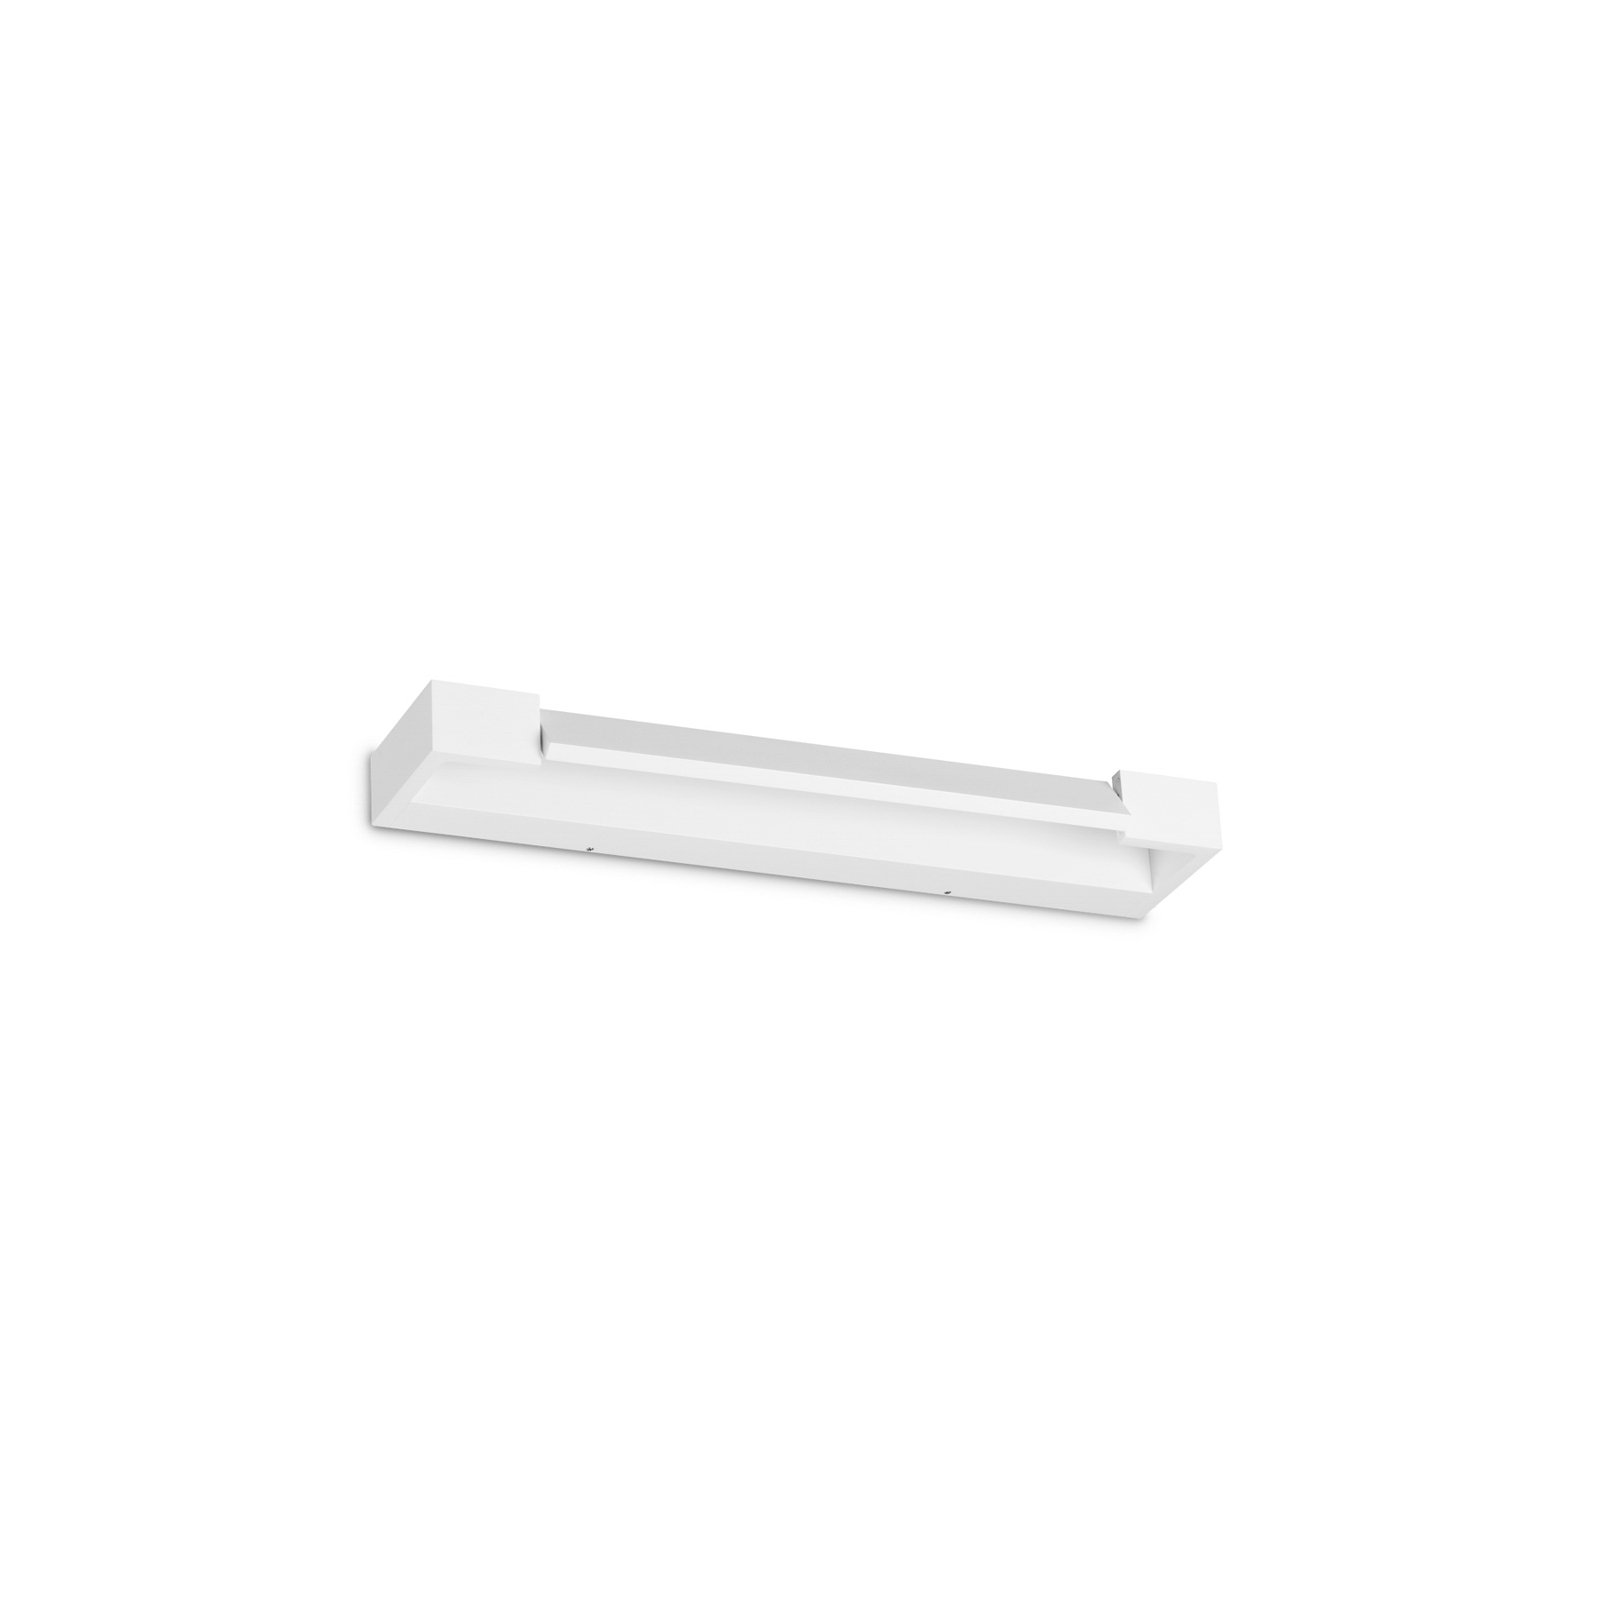 Ideal Lux Applique a LED Balance bianco, metallo, larghezza 45 cm